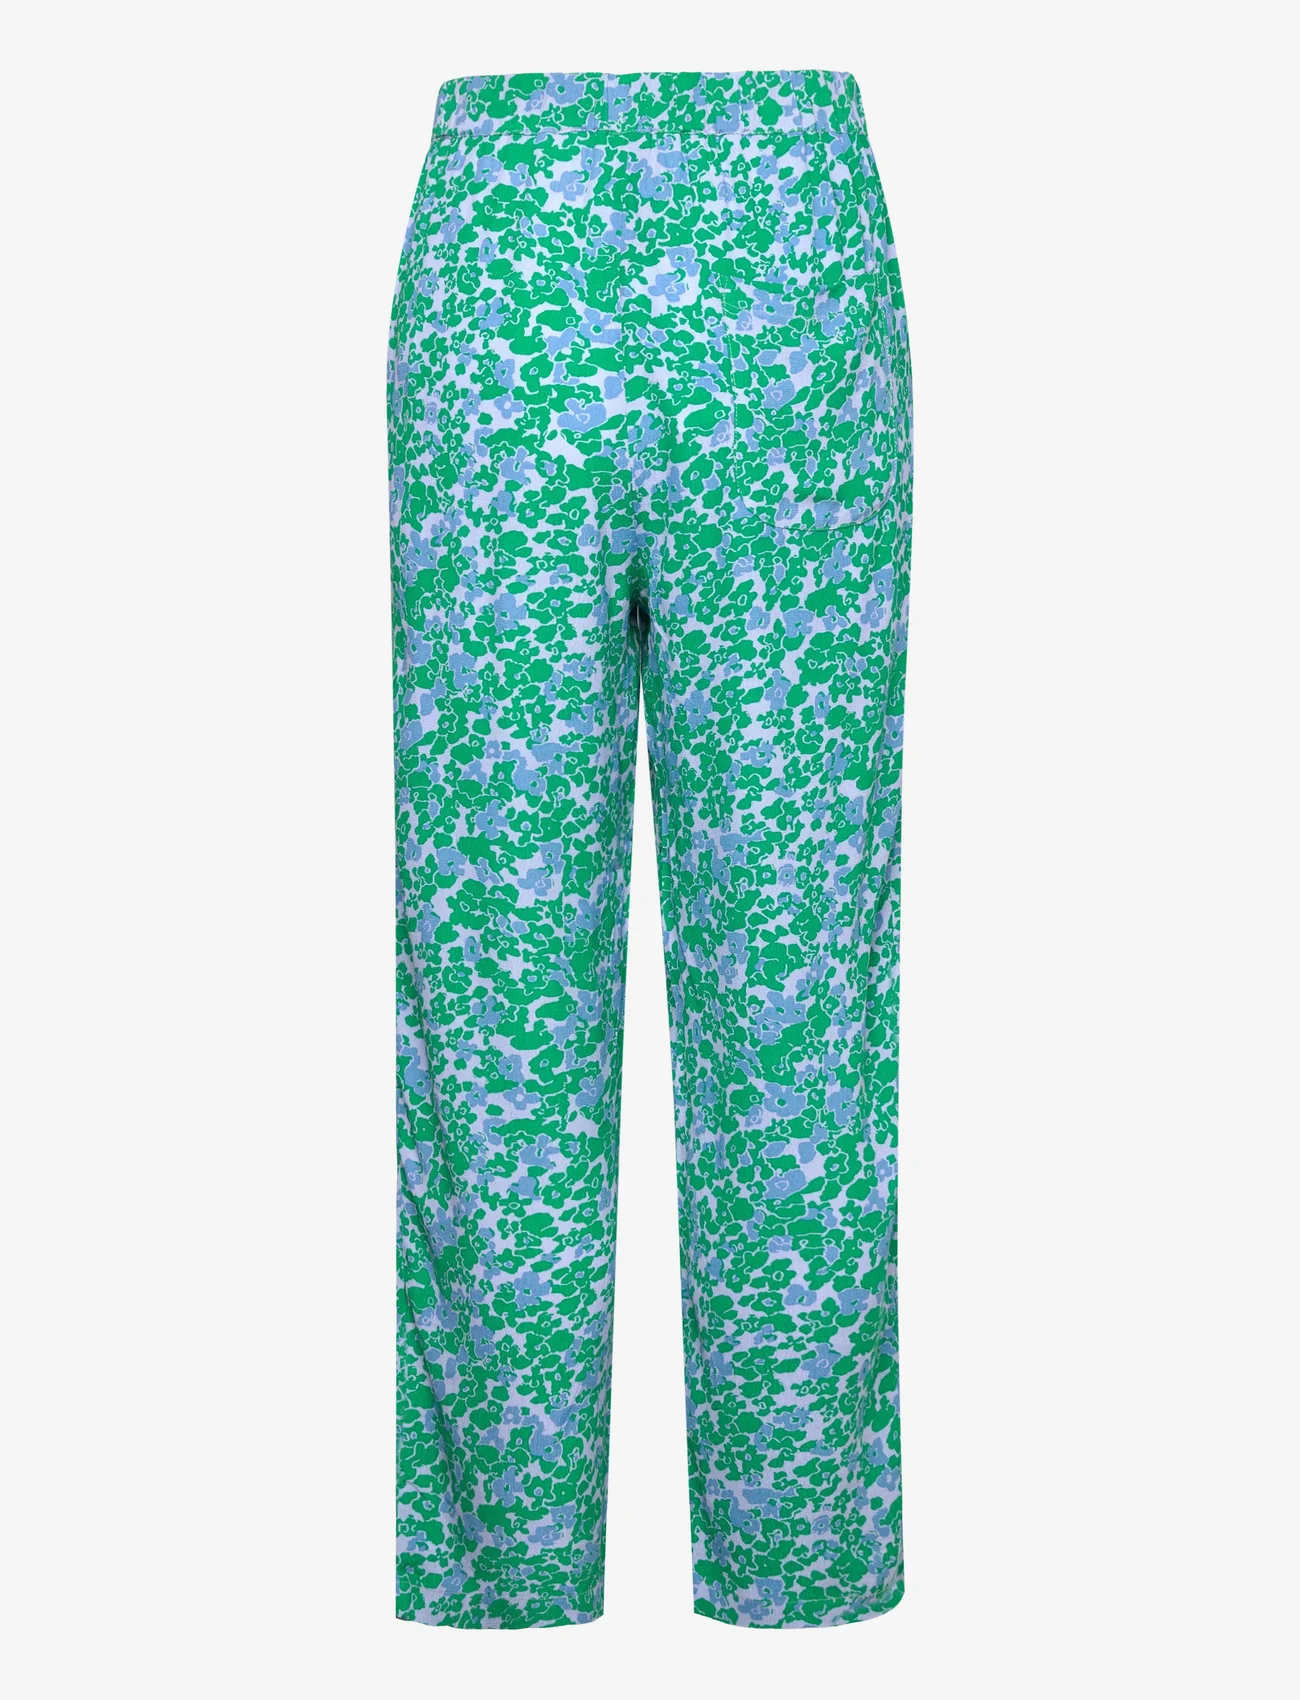 Noa Noa - BellaNN Trousers - tiesaus kirpimo kelnės - print blue/green - 1